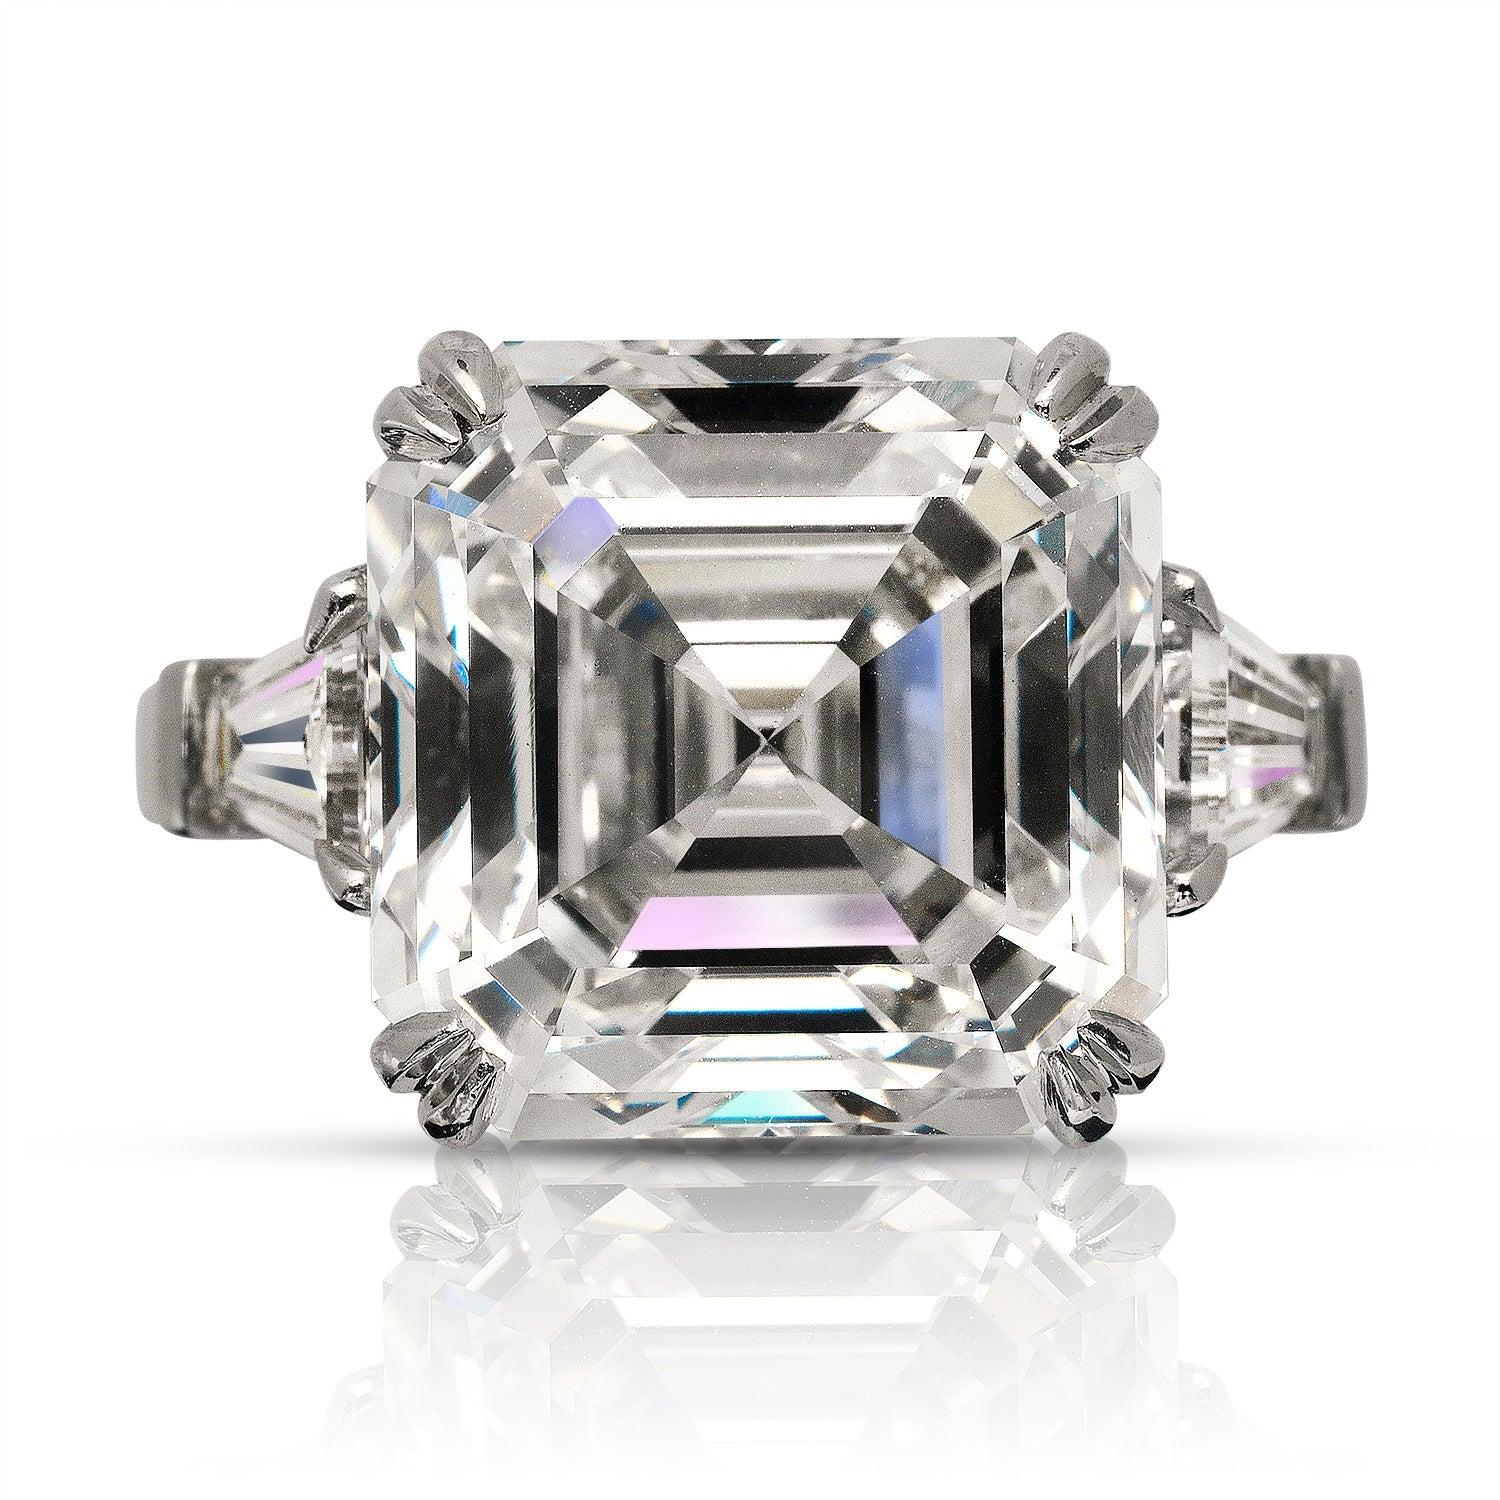 ATHENA -13 CARAT ASSCHER CUT DIAMOND ENGAGEMENT RING  BY MIKE NEKTA
GIA CERTIFIED
Center Diamond:

Carat Weight: 11.9 Carats
Color : G*
Clarity: VVS2
Style: ASSCHER CUT 
Approximate Measurements: 12.4 x 12.3 x 8.6 mm
* This diamond has been treated